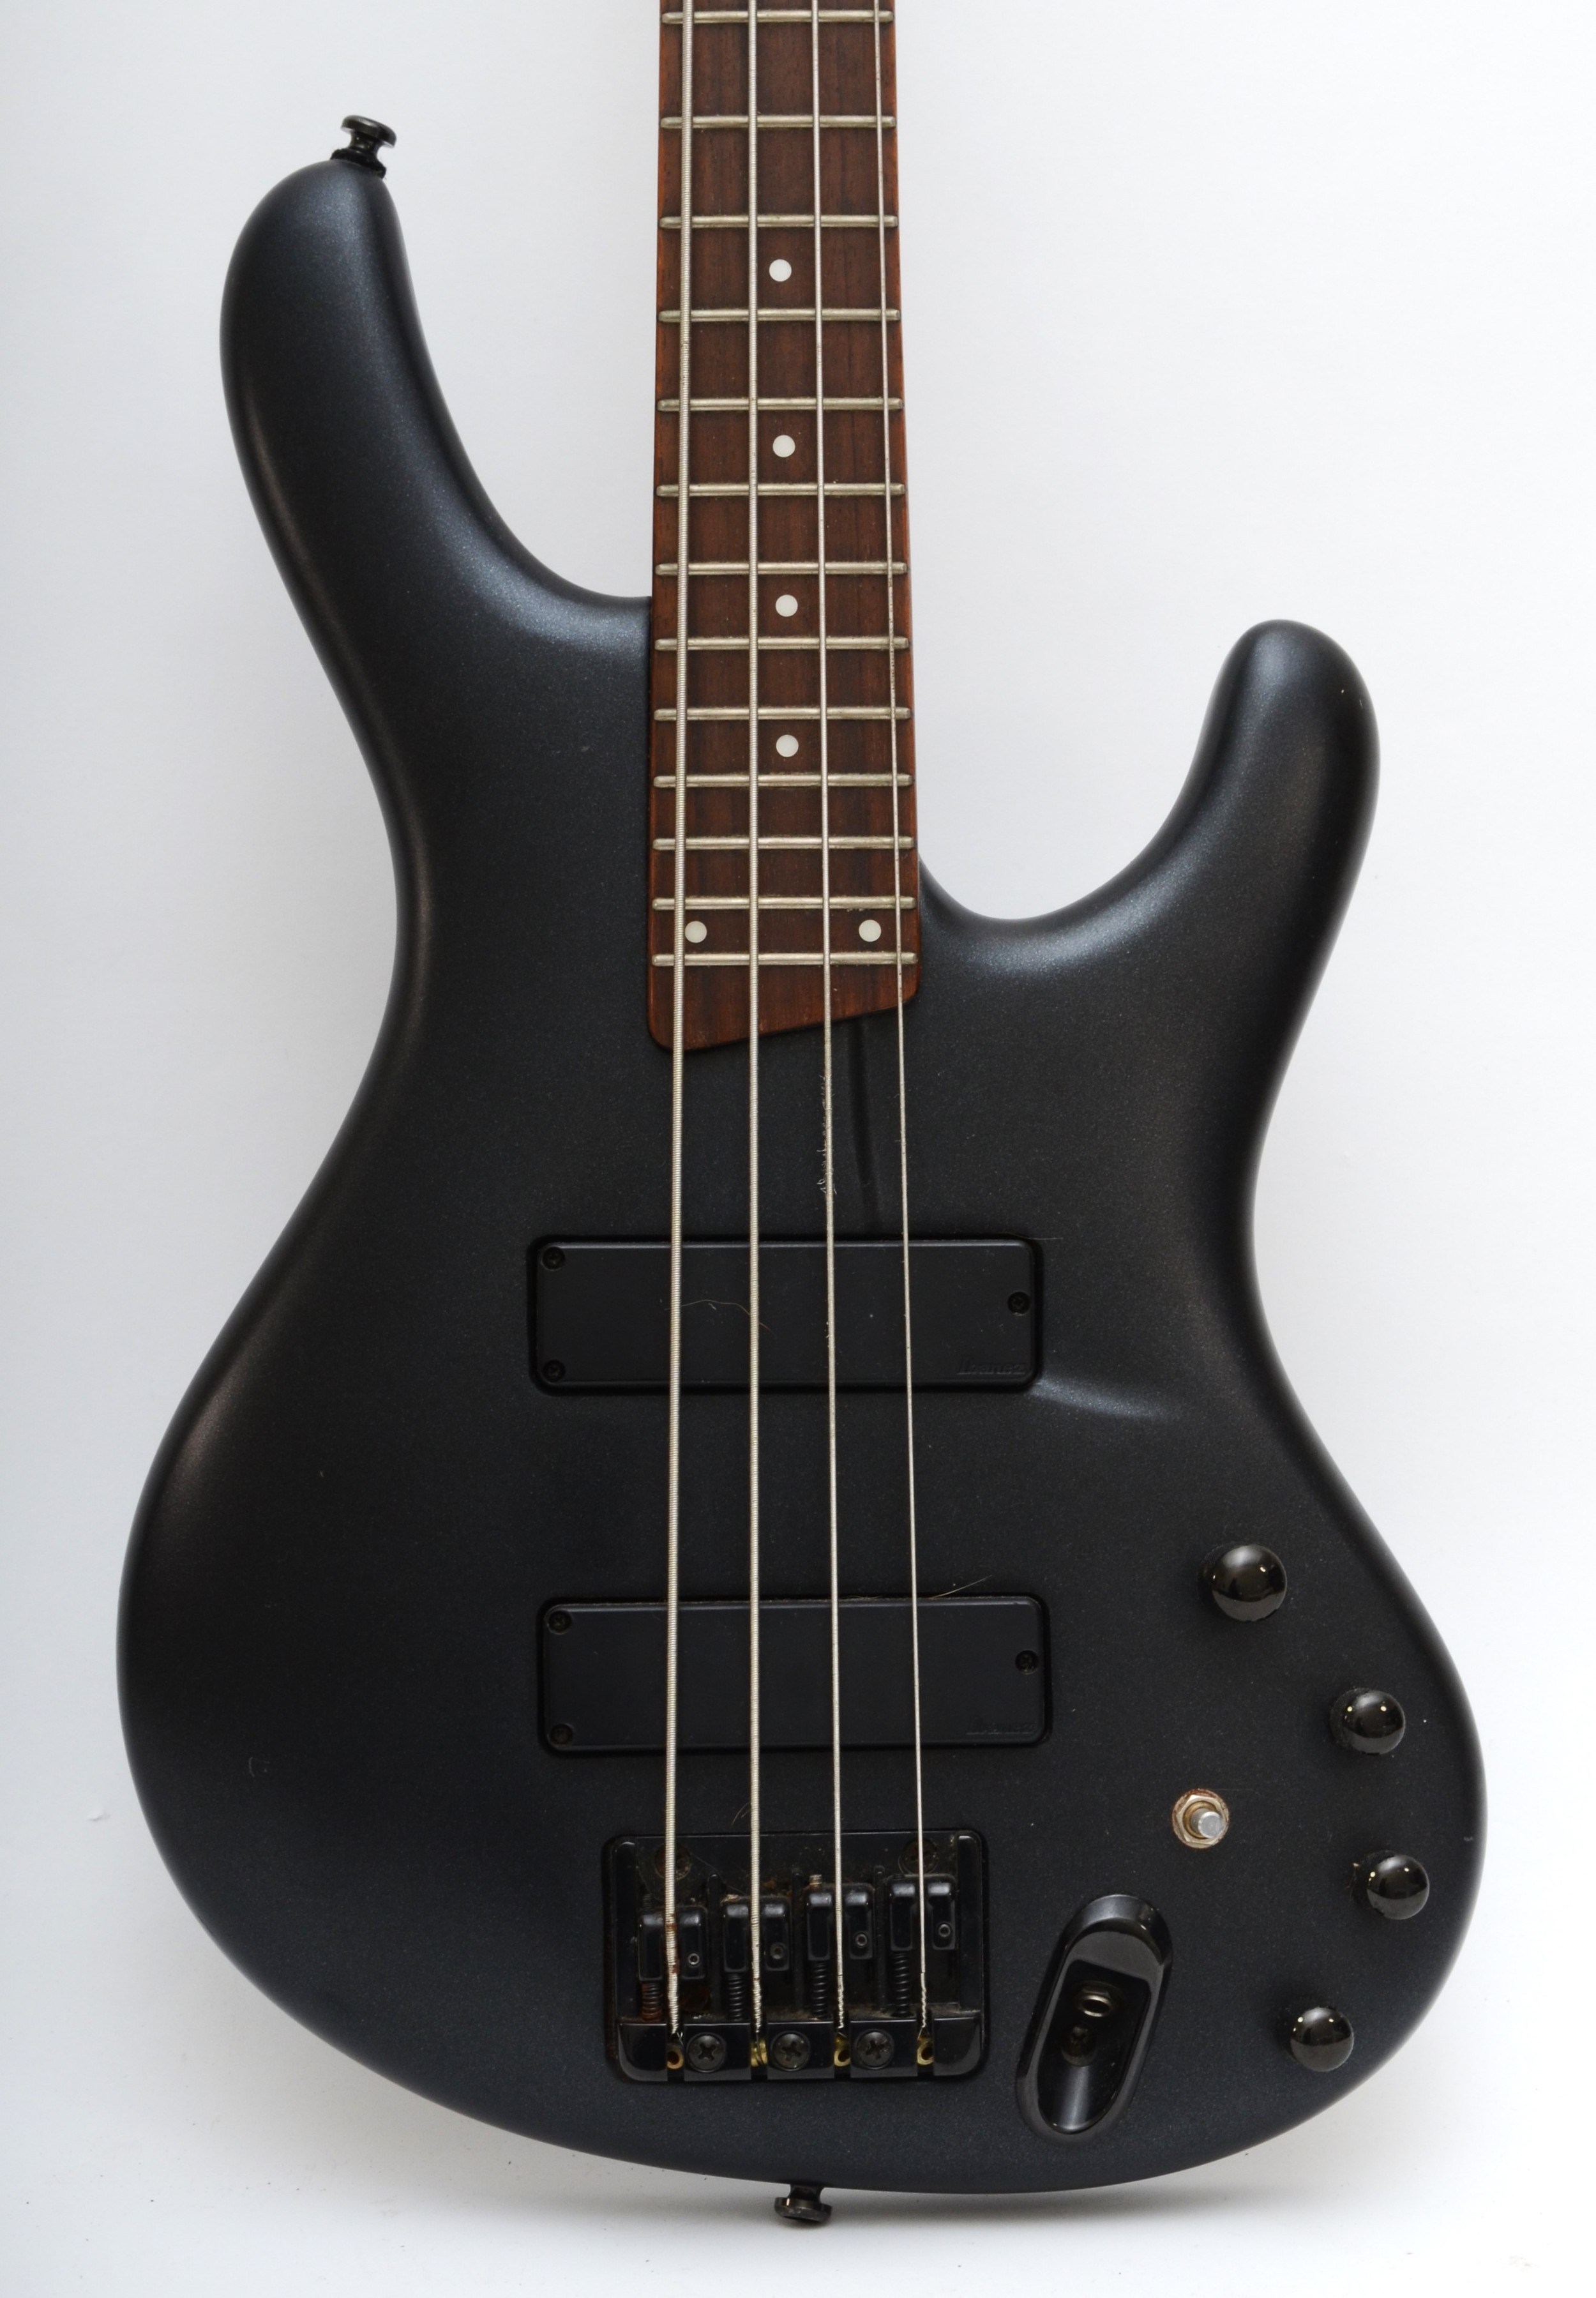 A Ibanez Ergodyne bass guitar, twin Ibanez pickups, black colourway, matt finish, 27inch neck length - Image 2 of 4